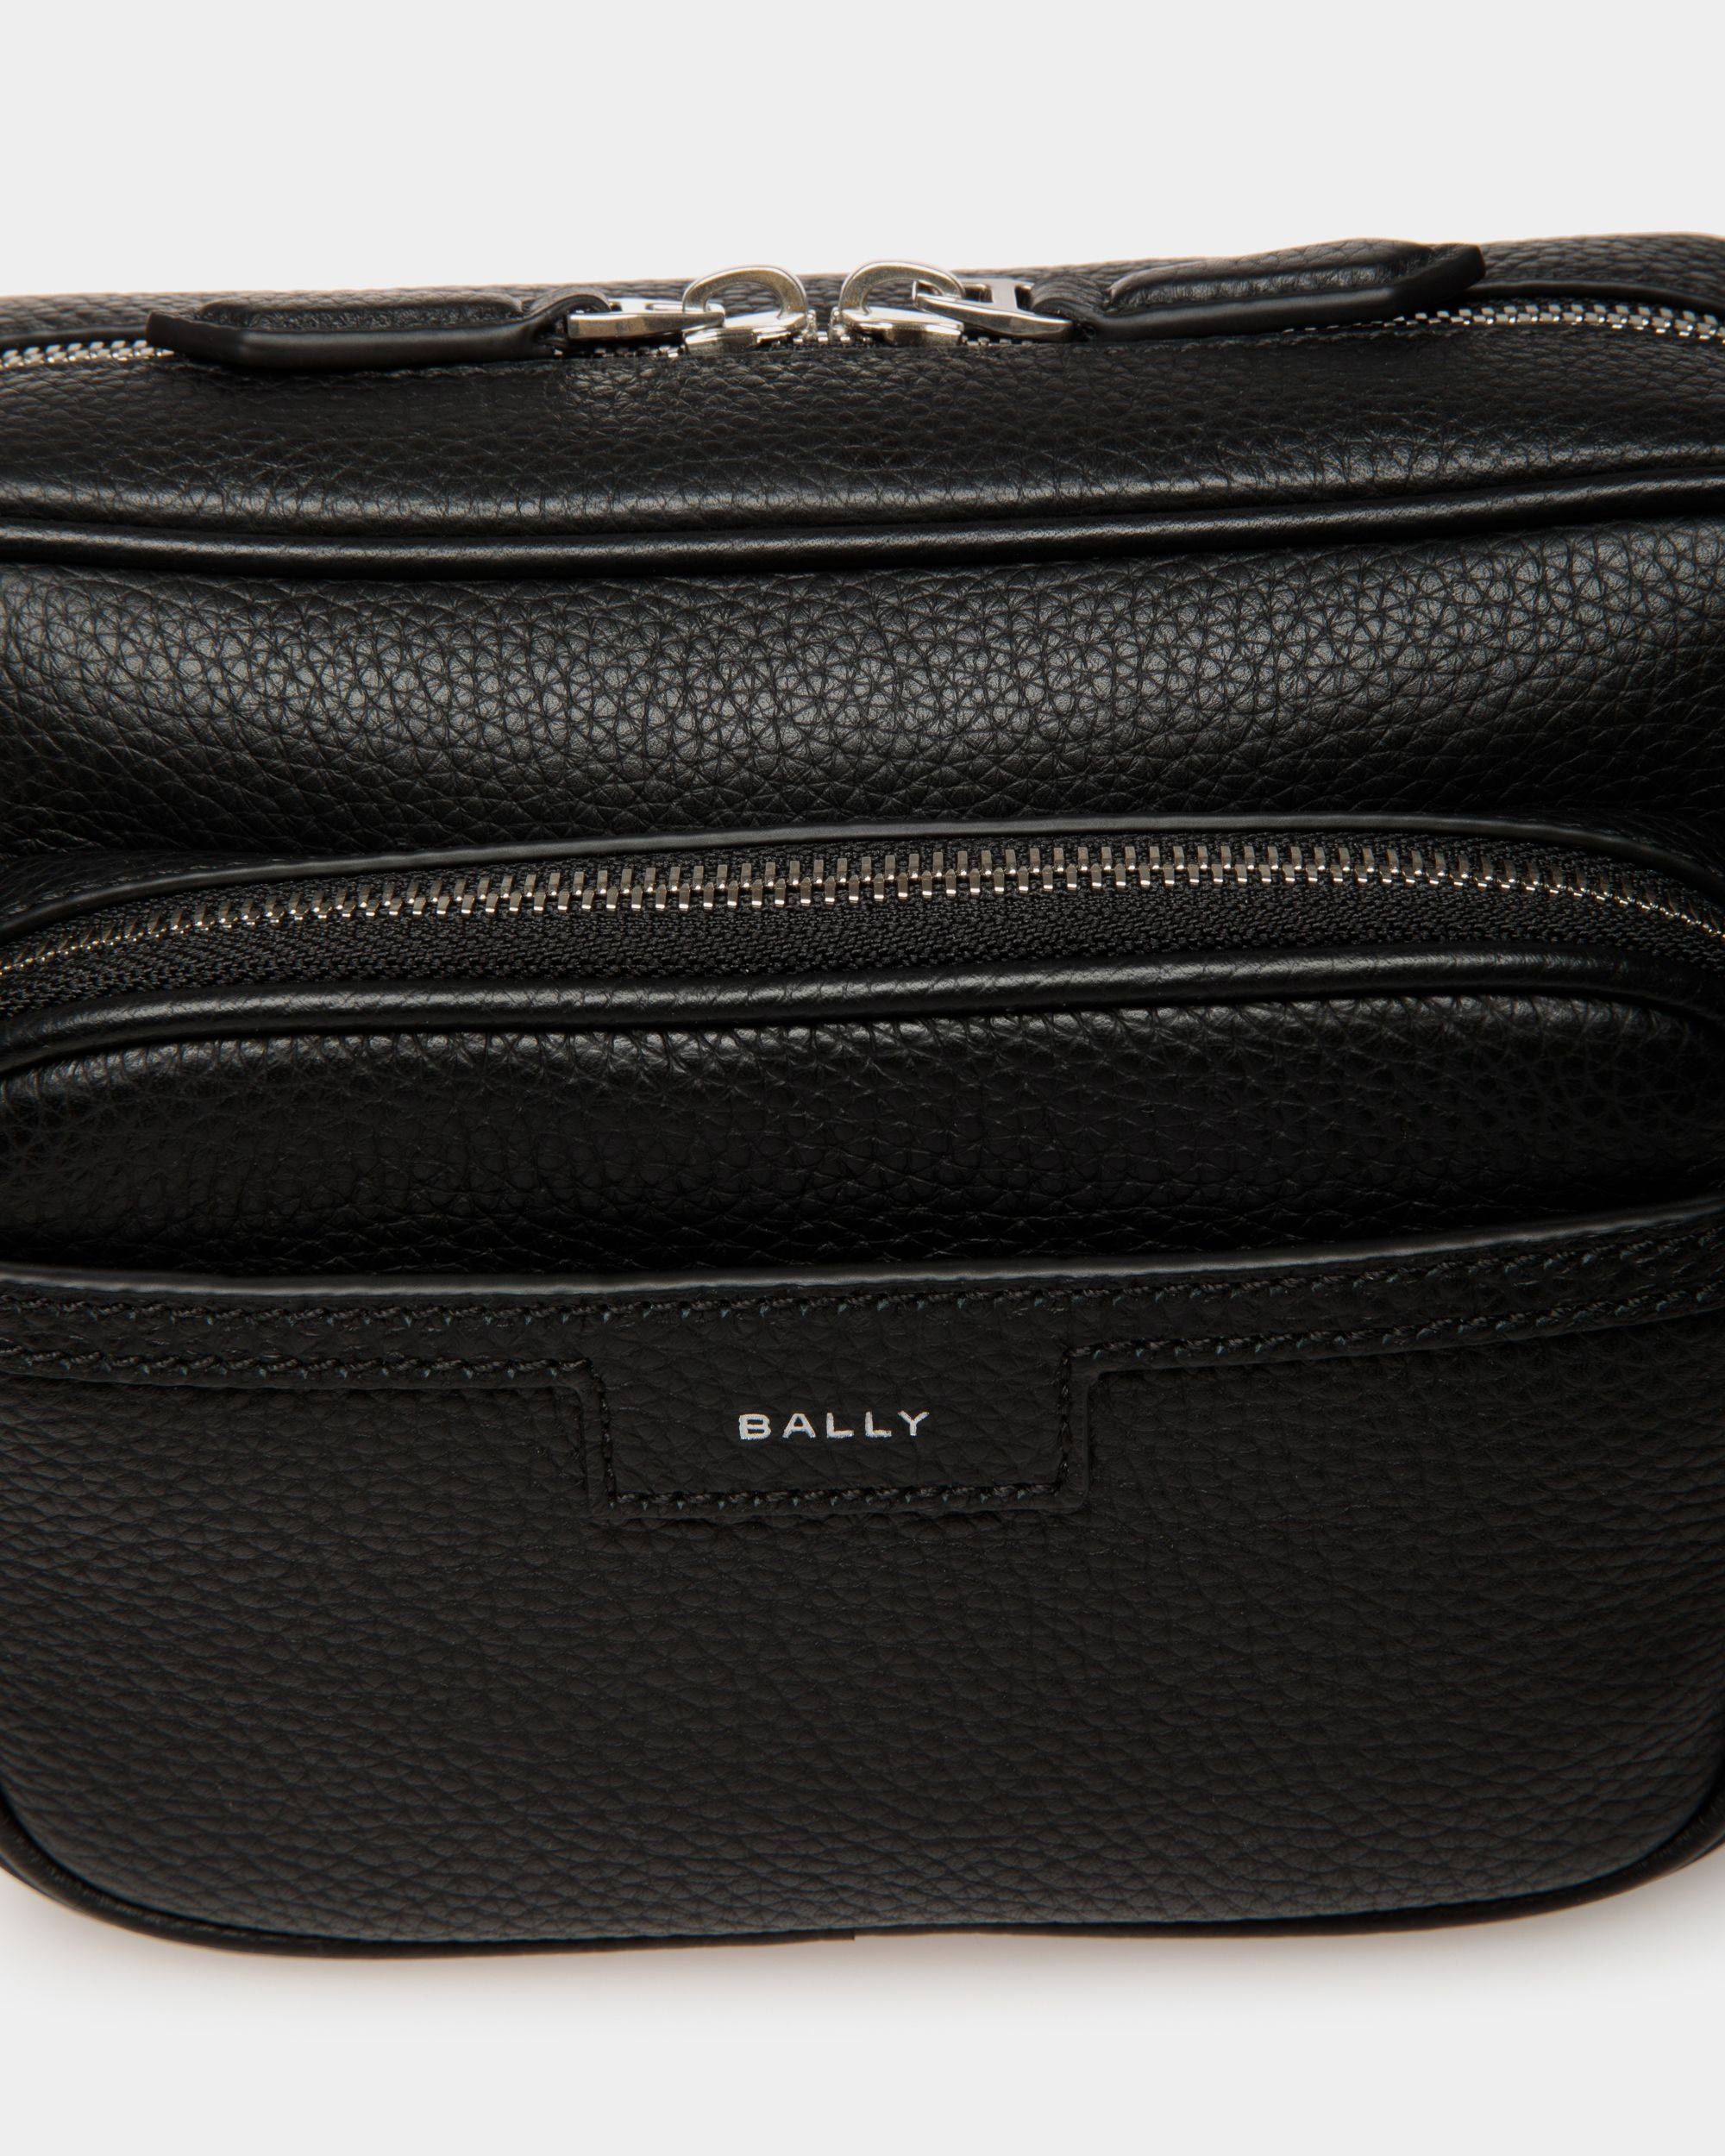 Code | Men's Crossbody Bag in Black Grained Leather | Bally | Still Life Detail